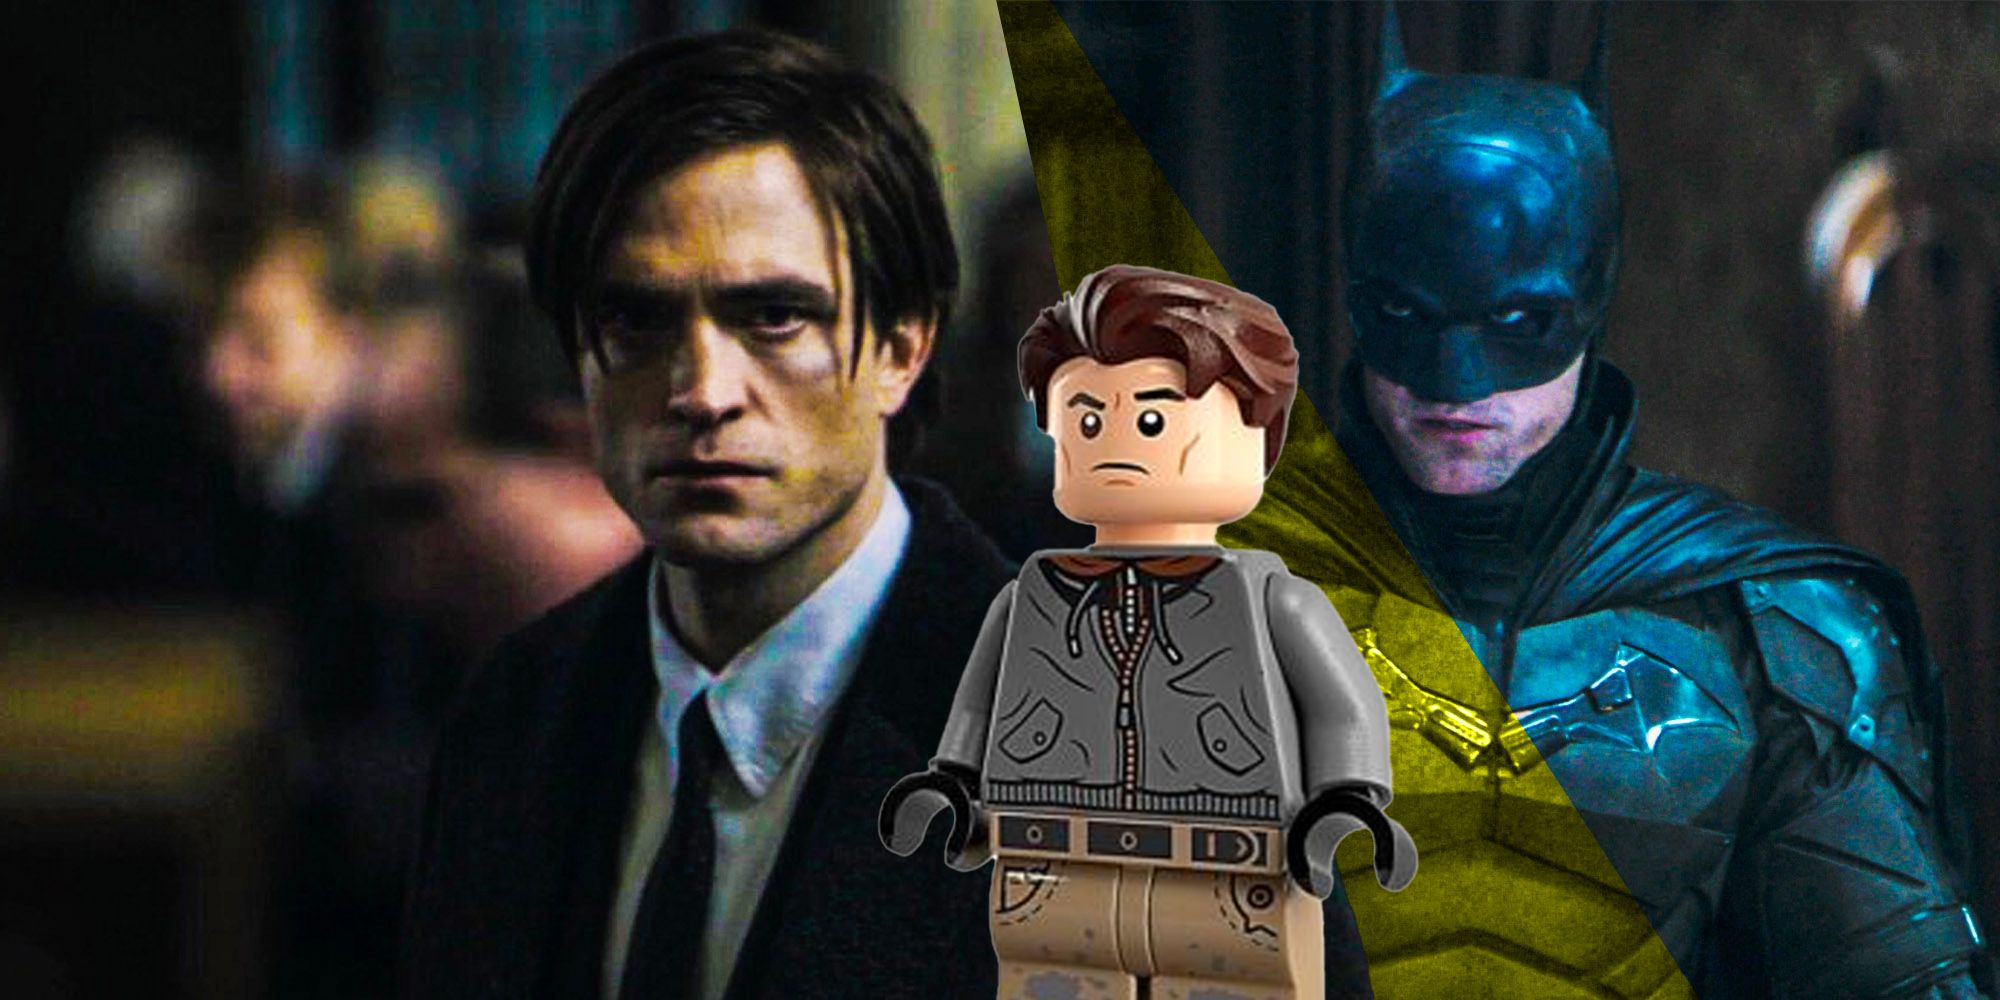 LEGO Batman Movie: Bruce Wayne plays dress-up in new photo